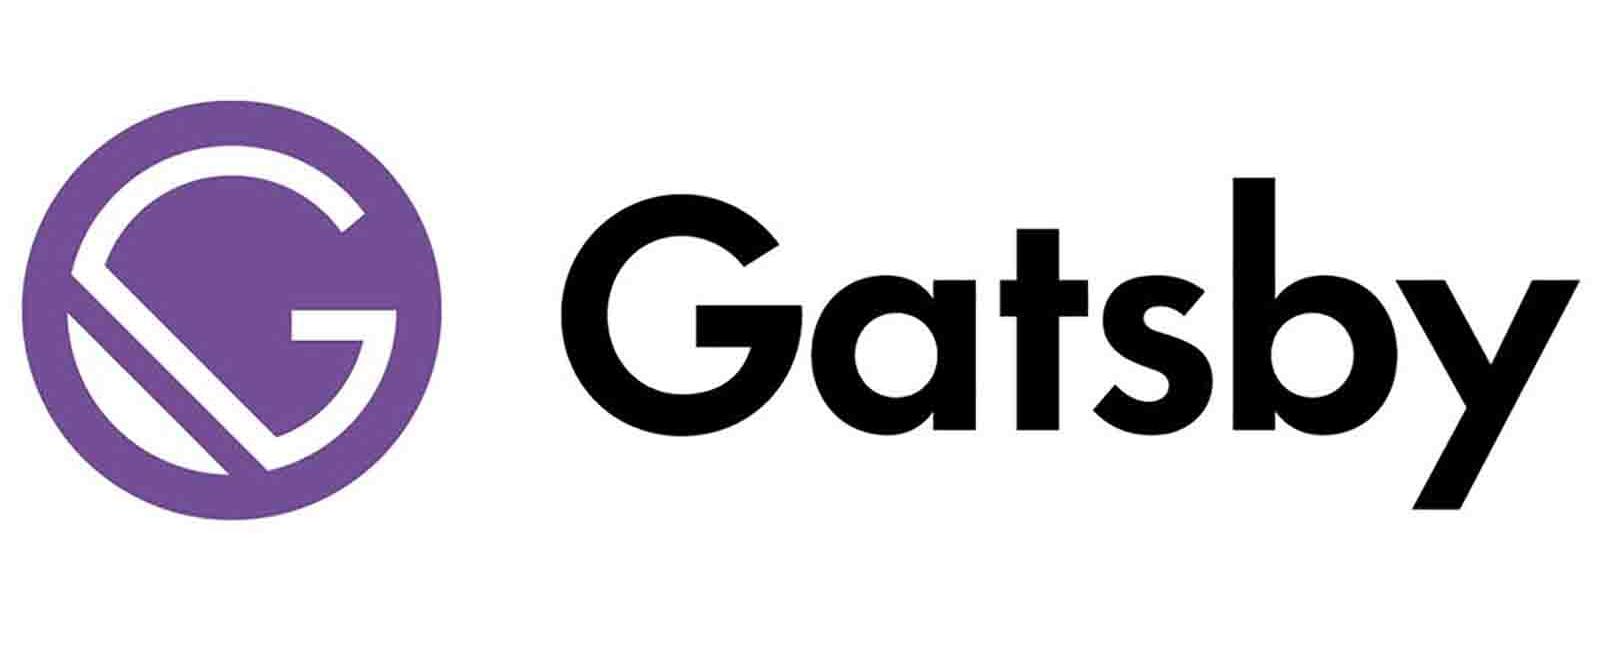 Gatsby로 시작하는 개발 블로그